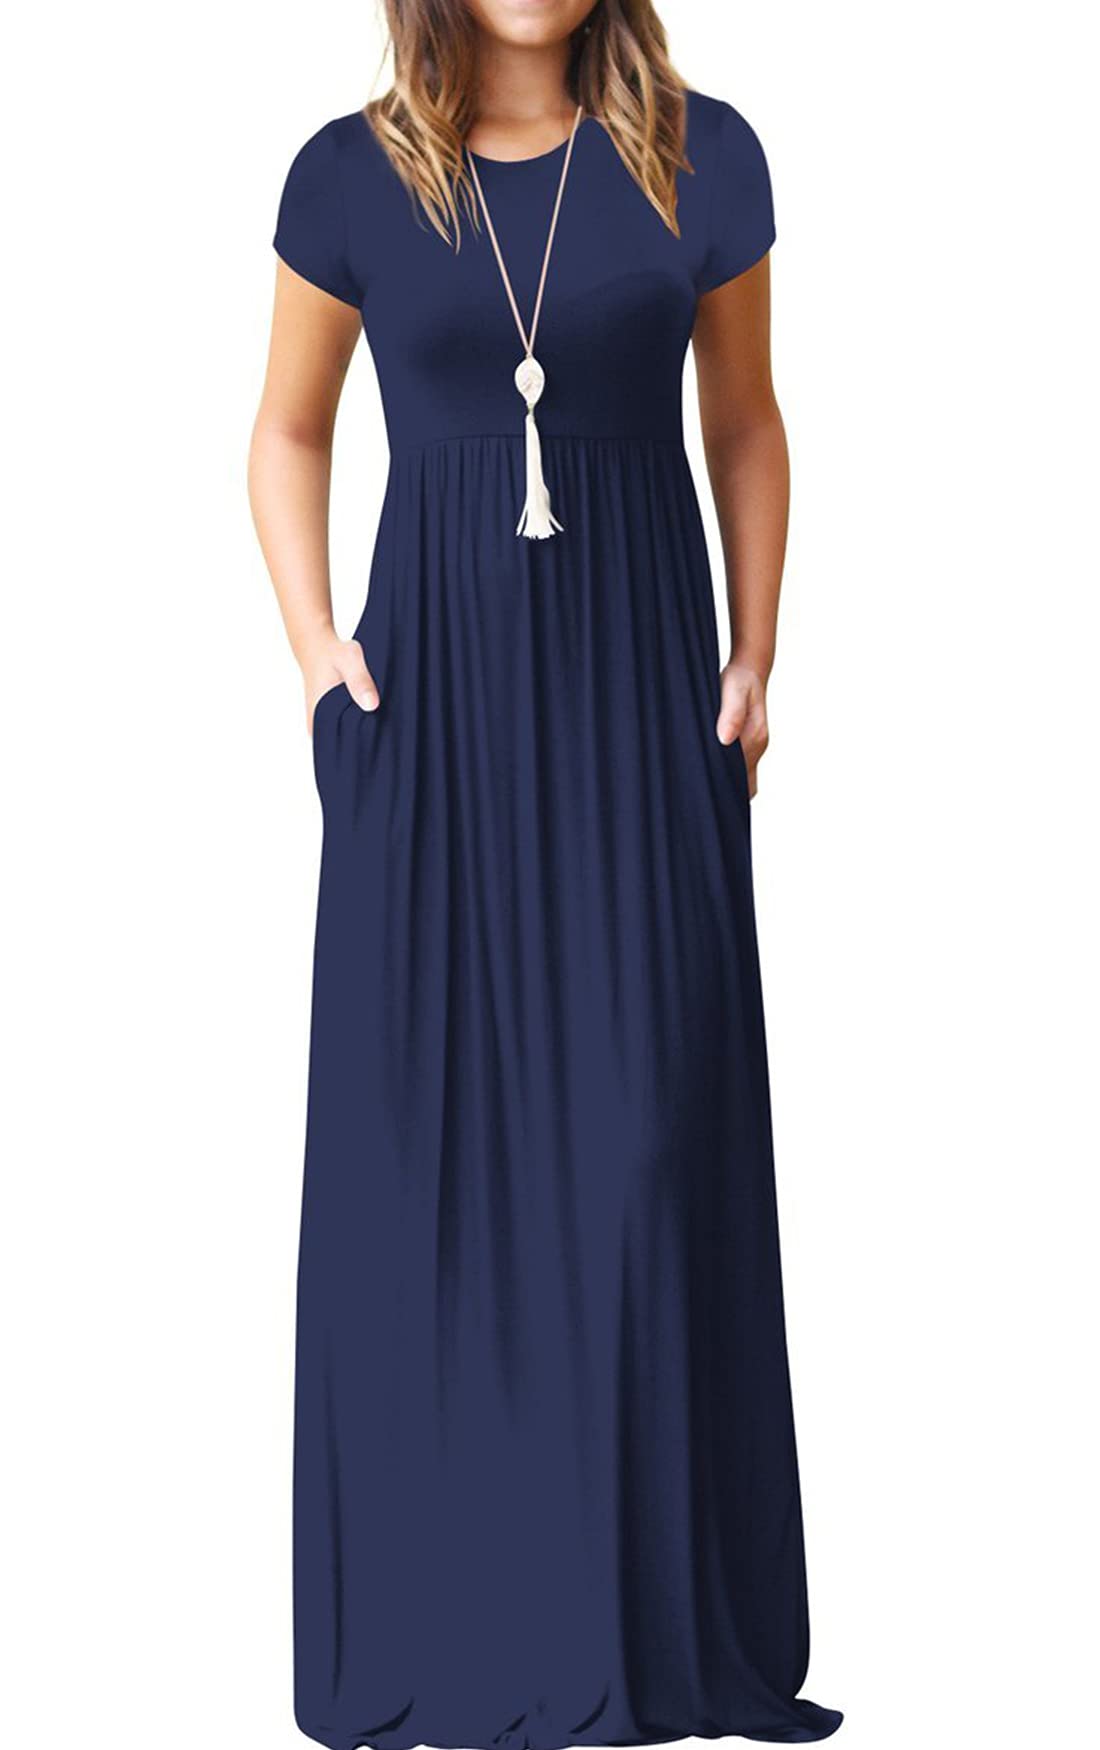 VIISHOW Women's Short Sleeve Loose Plain Maxi Dresses Casual Long Dresses with Pockets